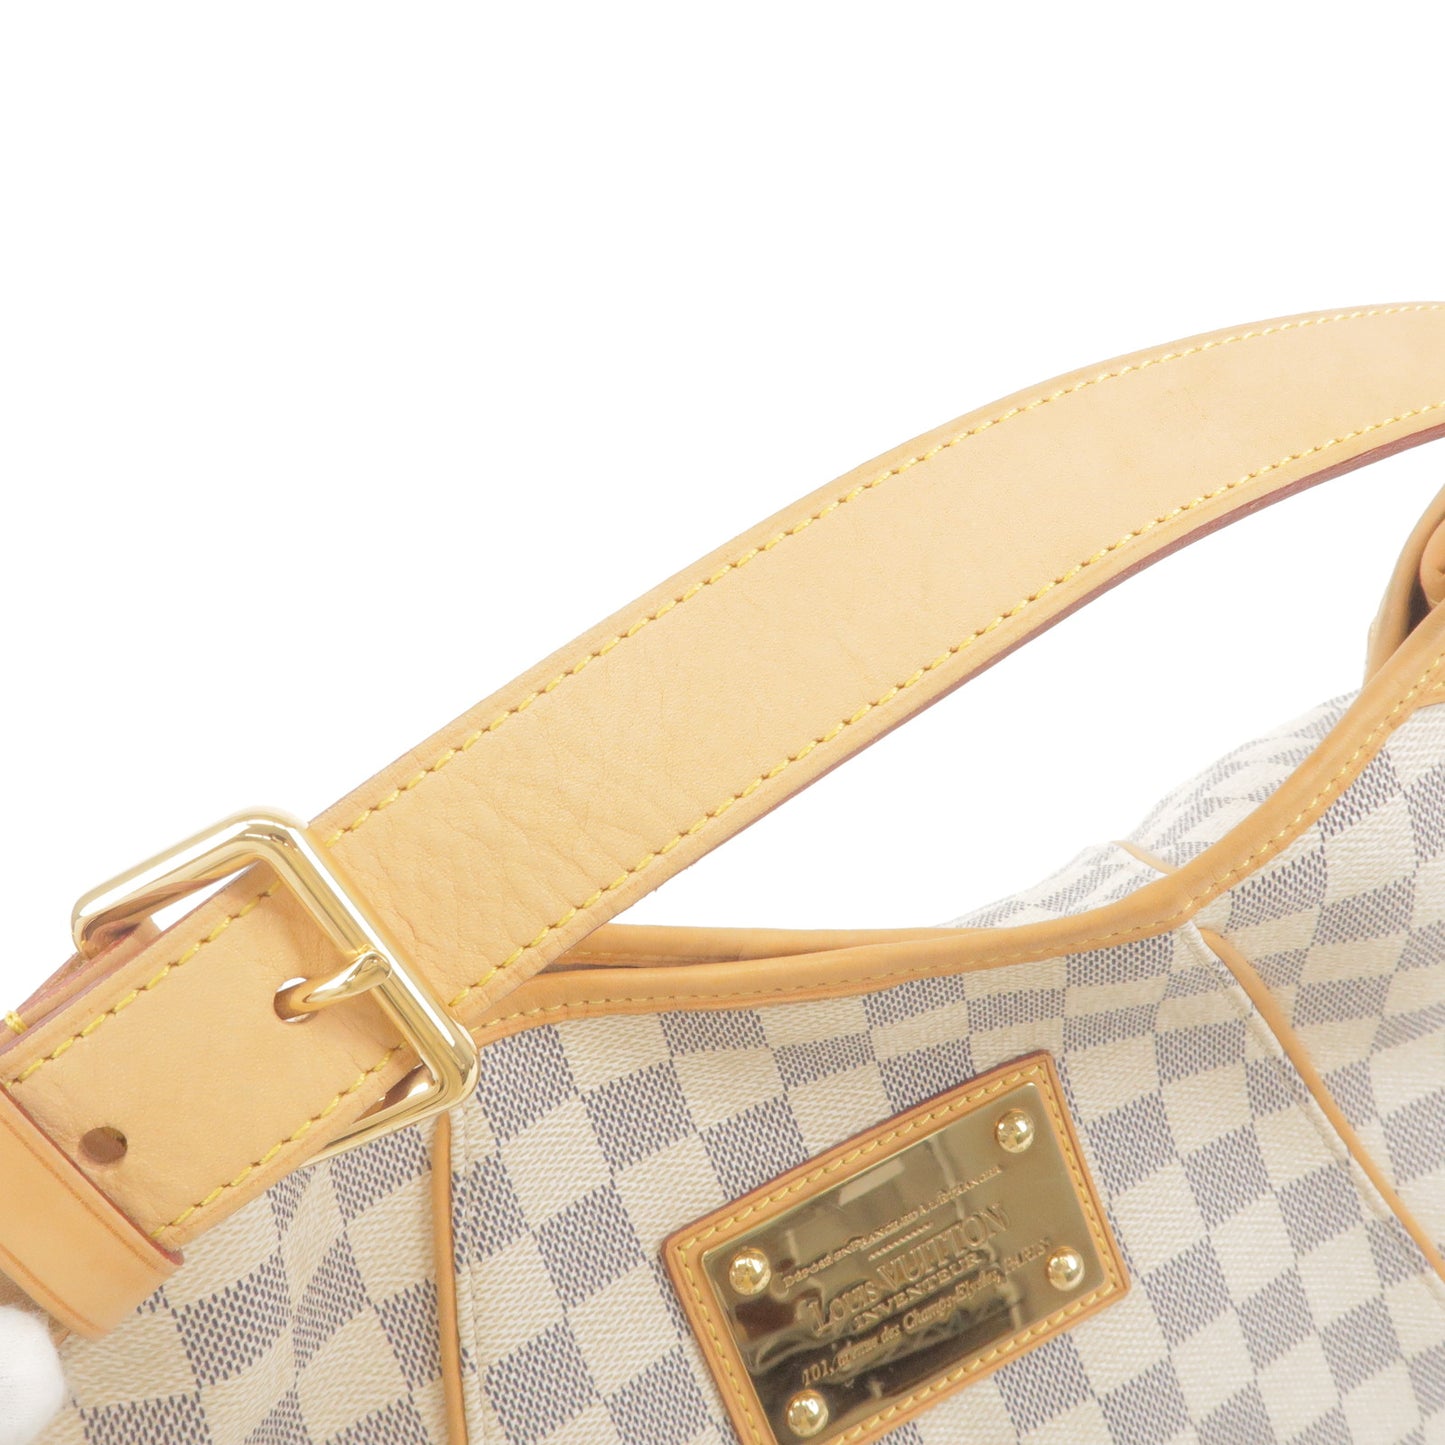 Louis Vuitton Damier Azur Galliera PM Shoulder Bag N55215